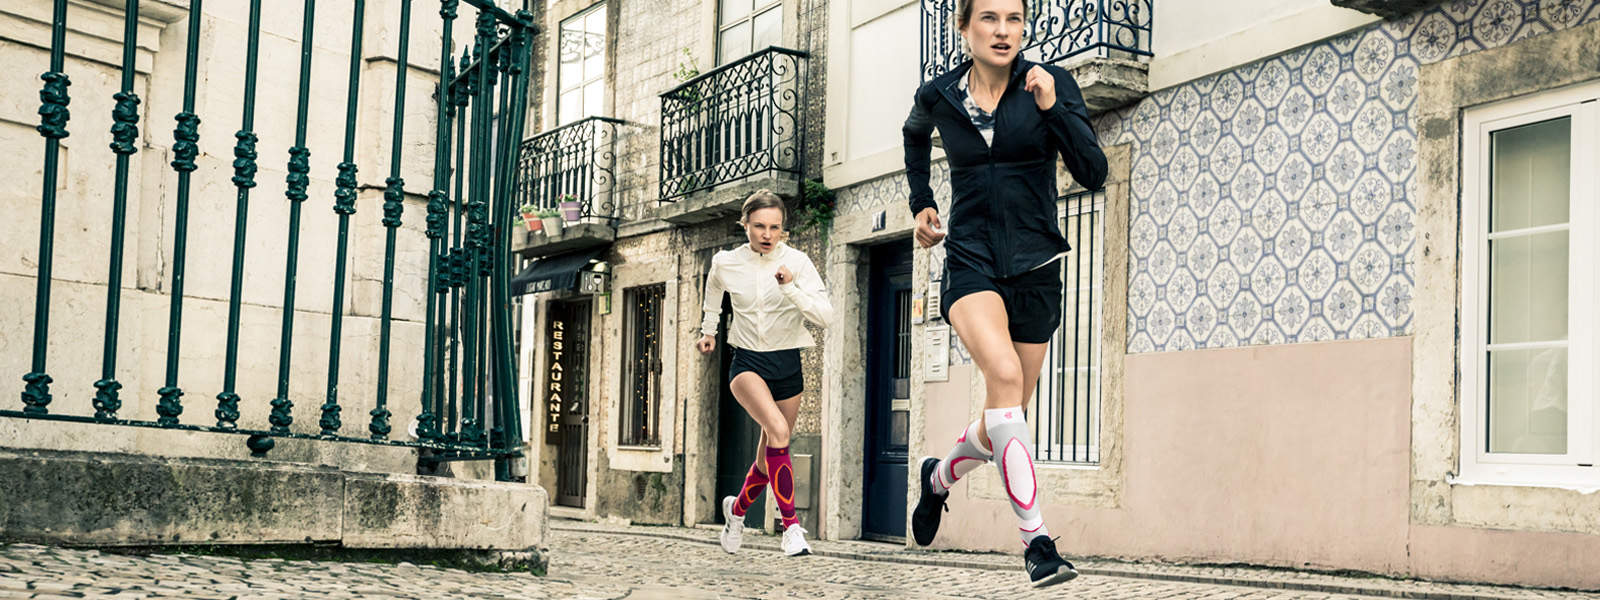 Two women run vigorously through an old town street with small balconies